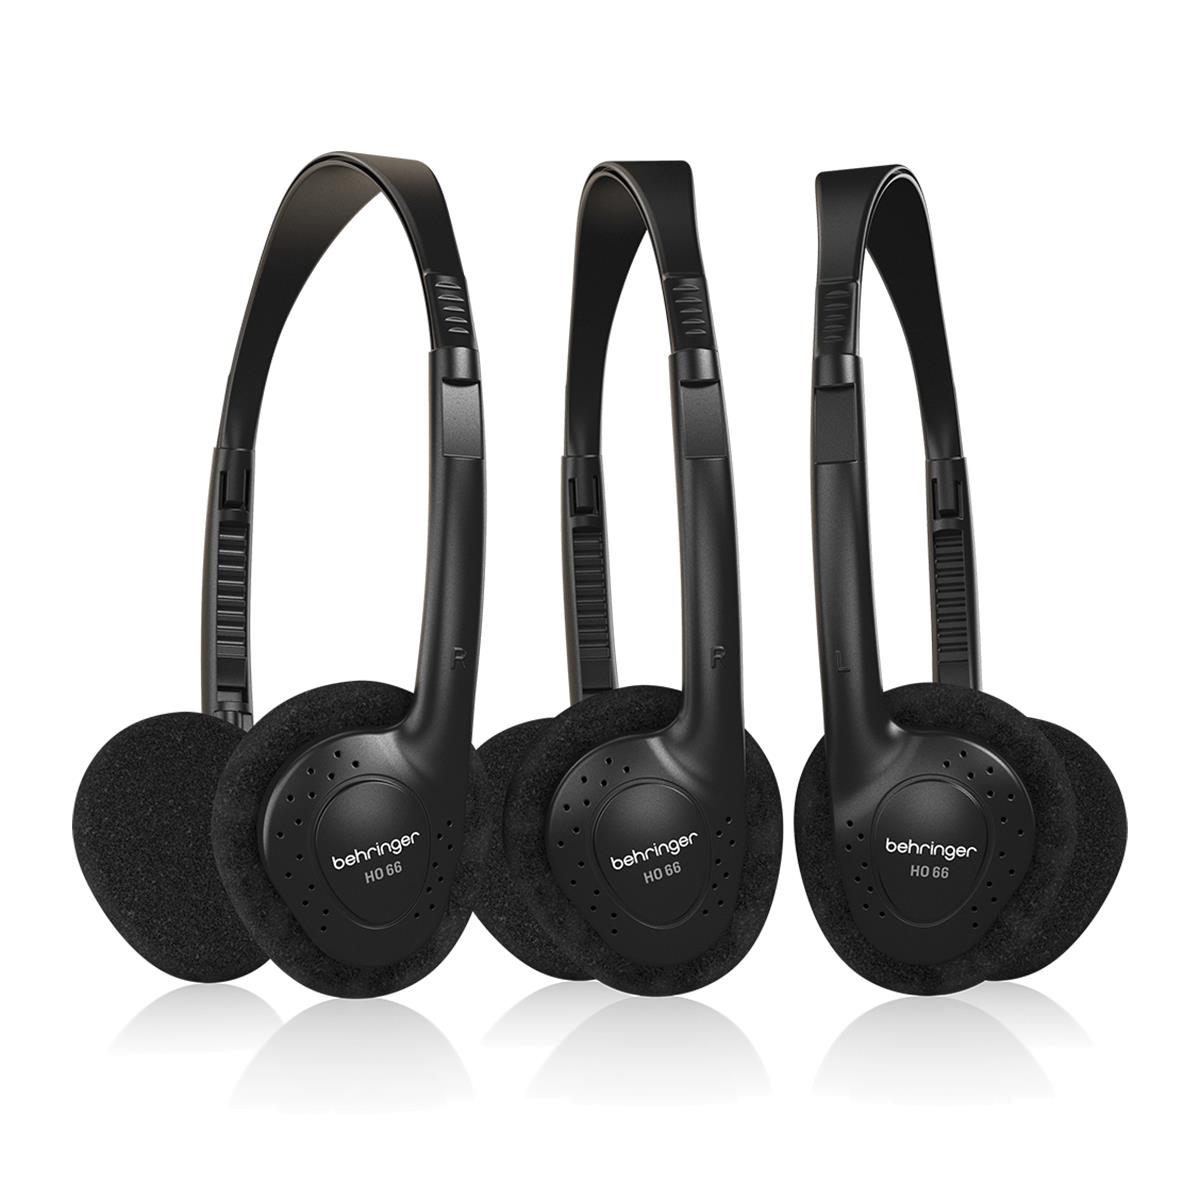 Image of Behringer HO 66 Wired On-Ear Stereo Headphones